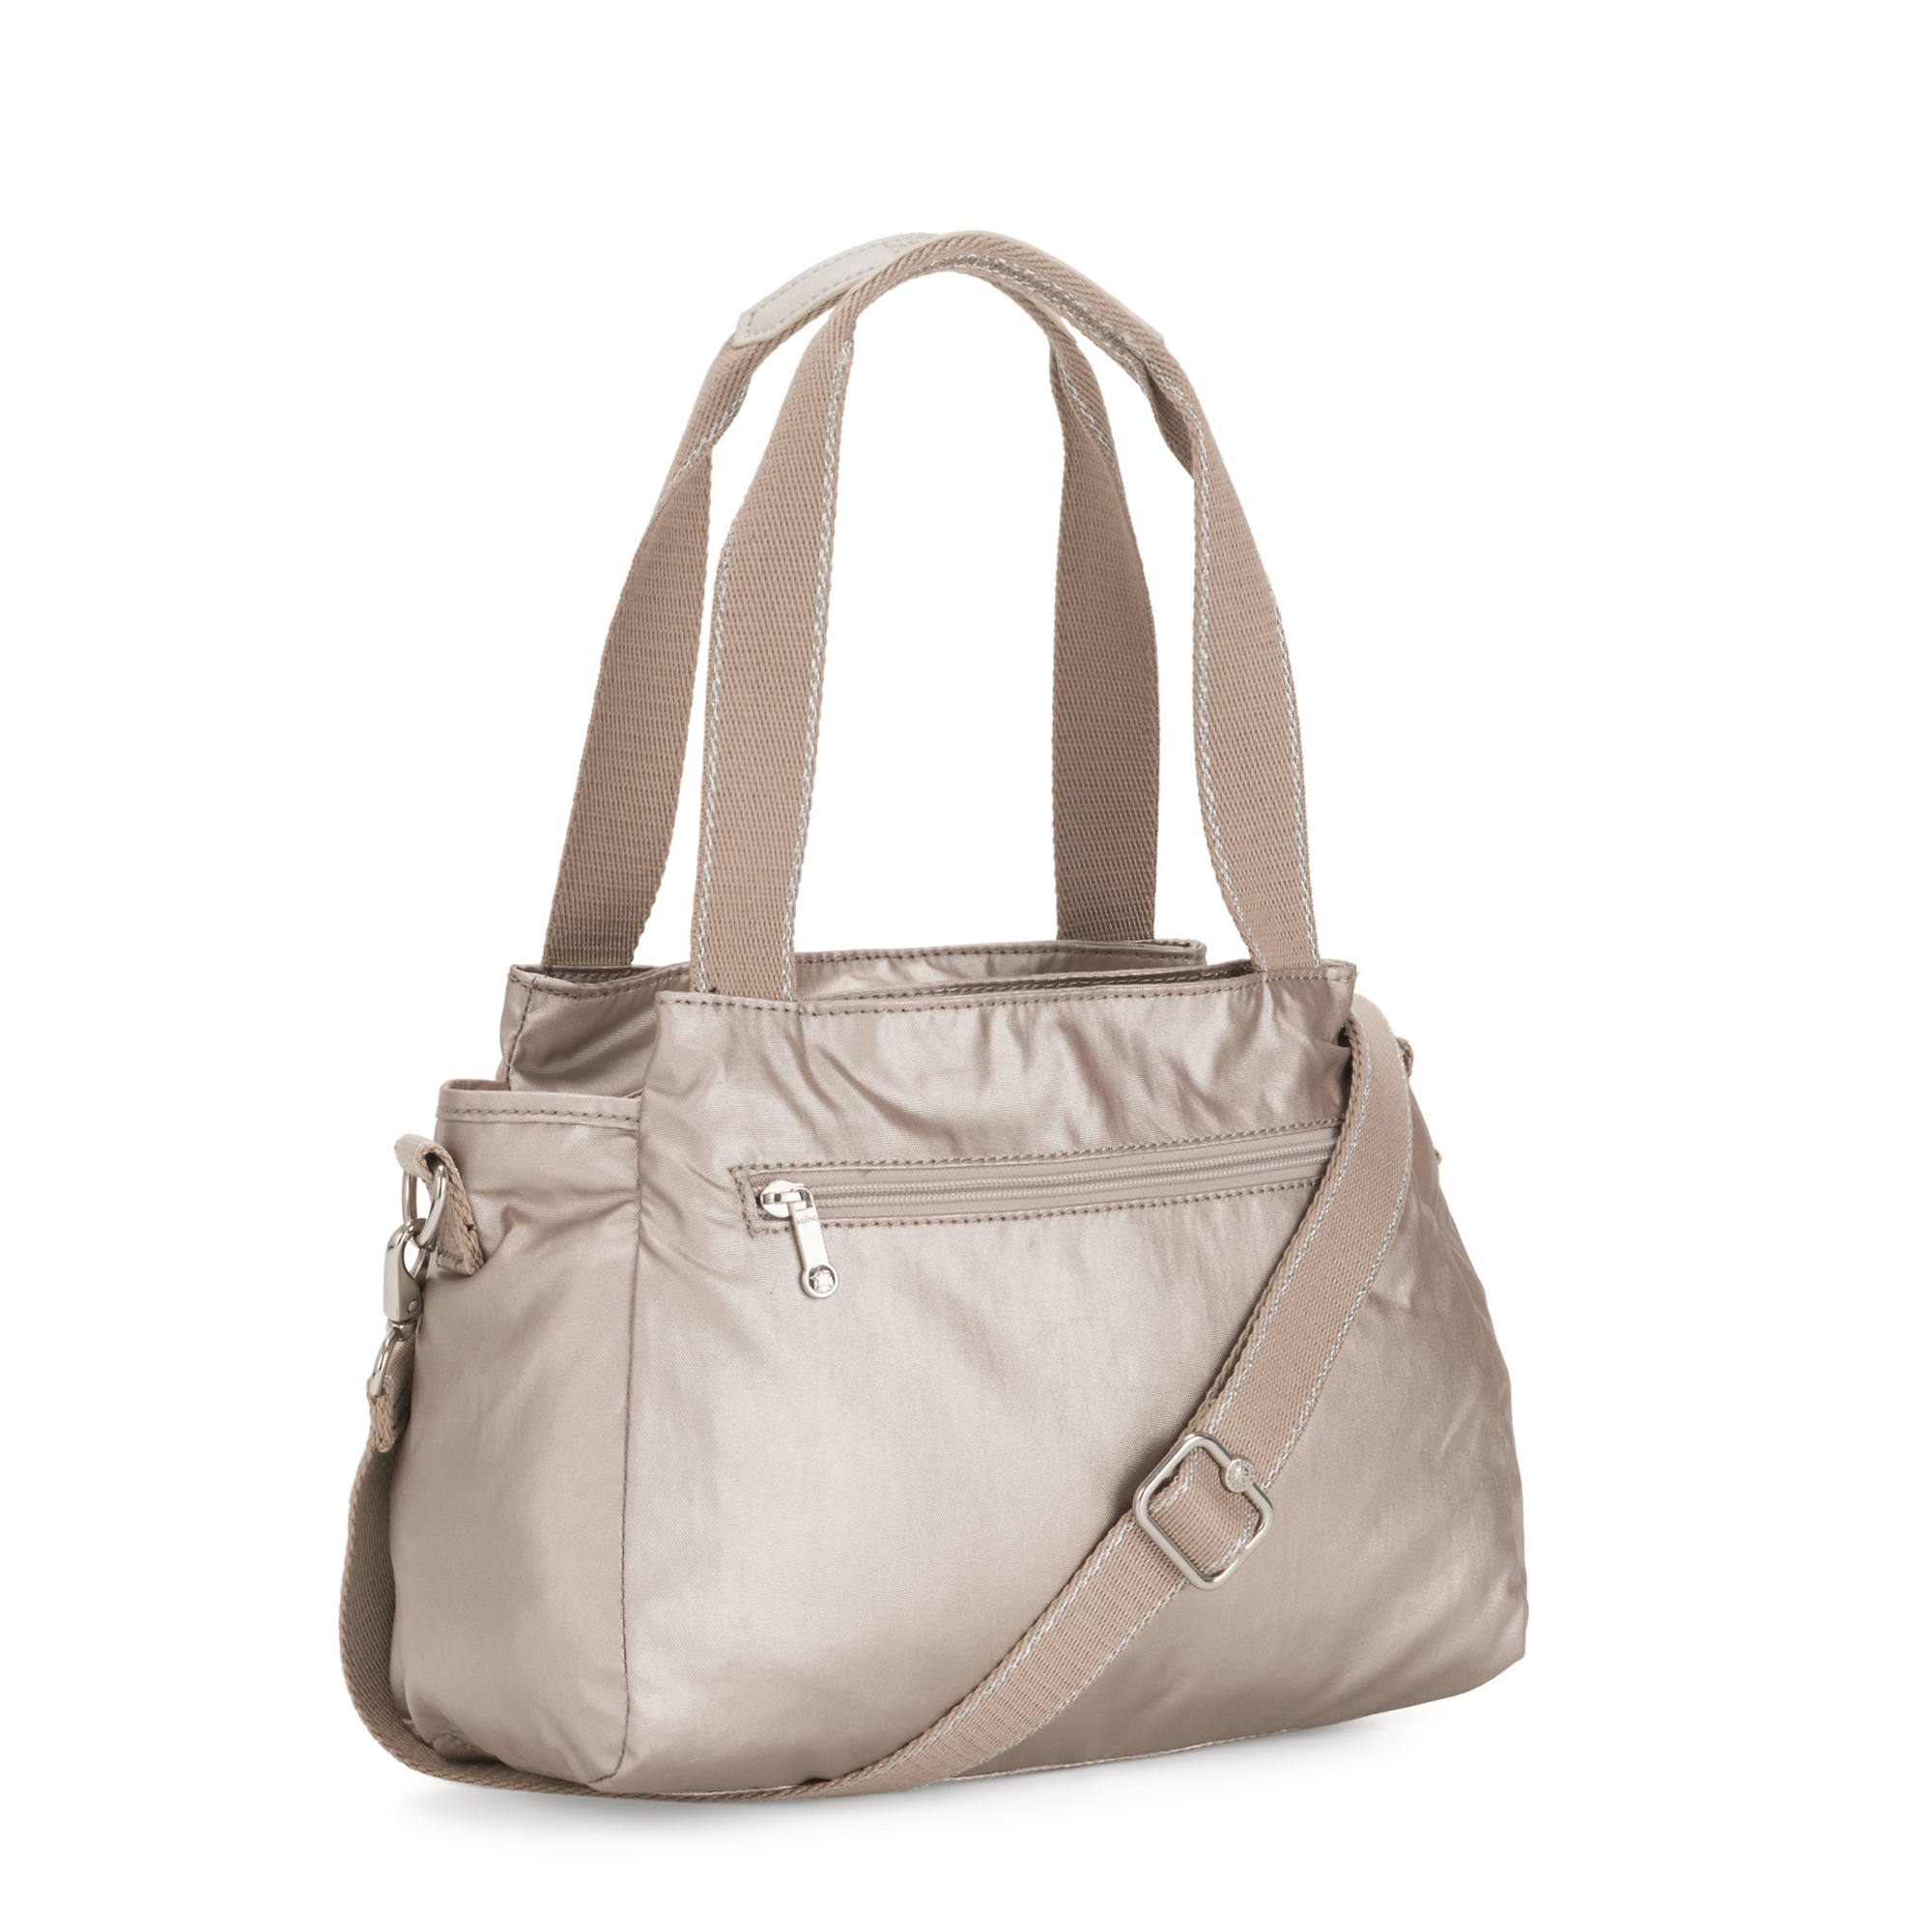 Kipling Elysia Crossbody Bag Metallic Glow for sale online | eBay